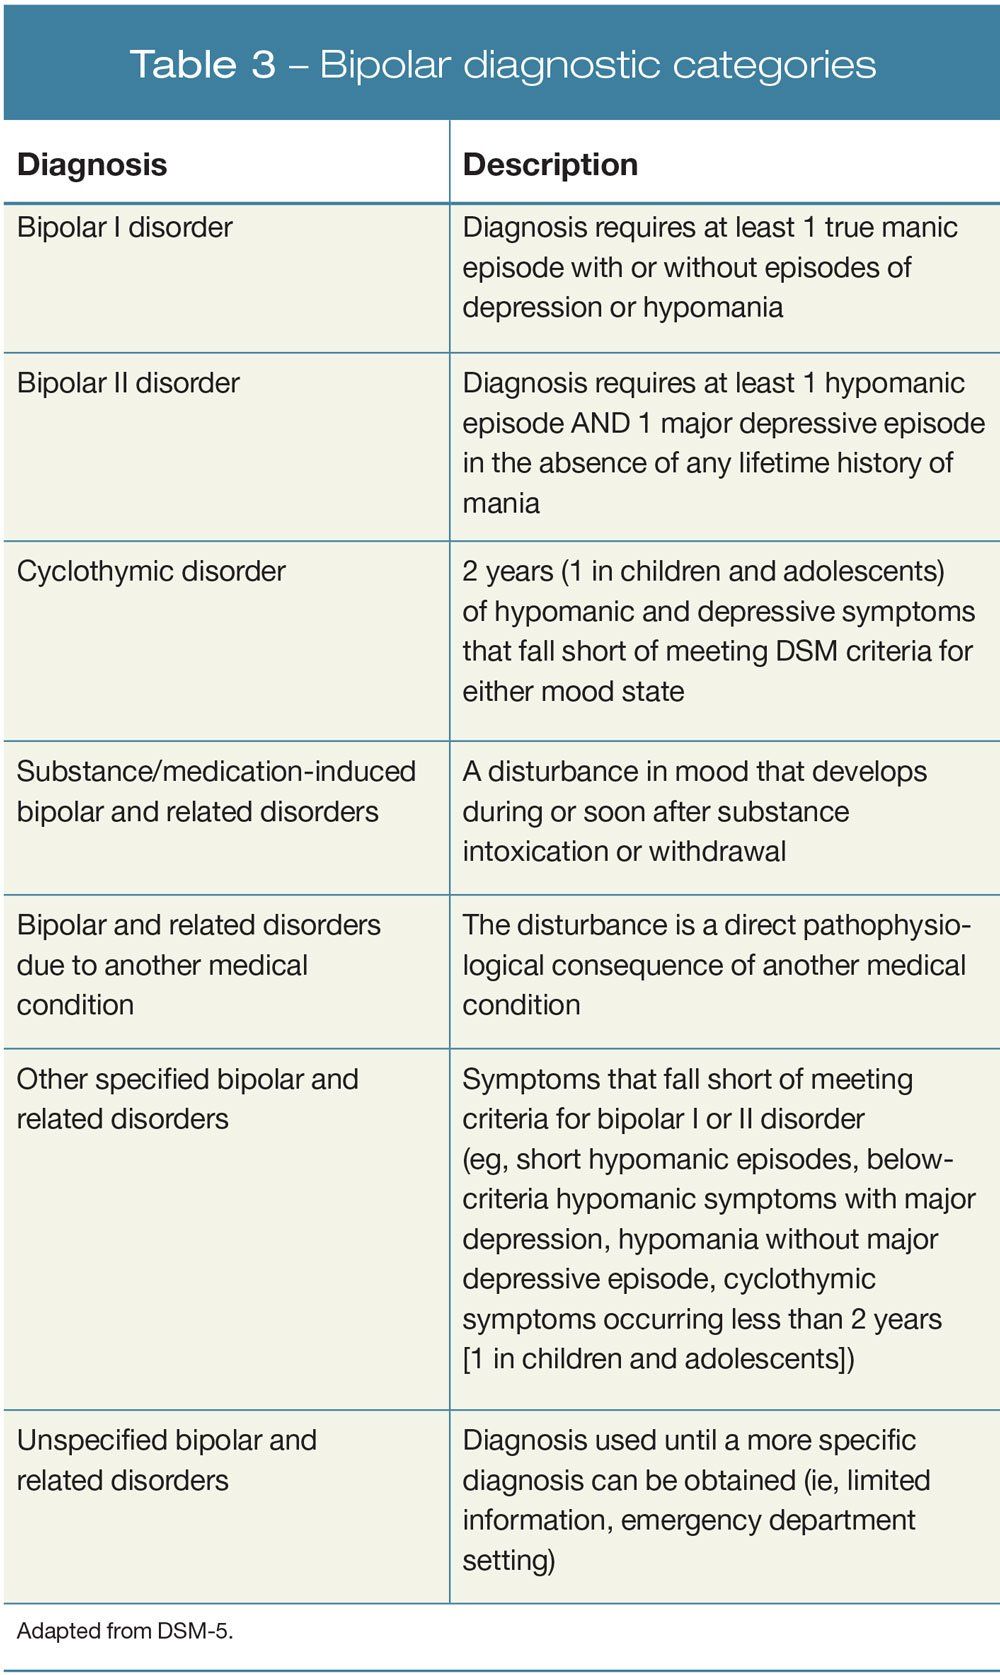 Bipolar diagnostic categories